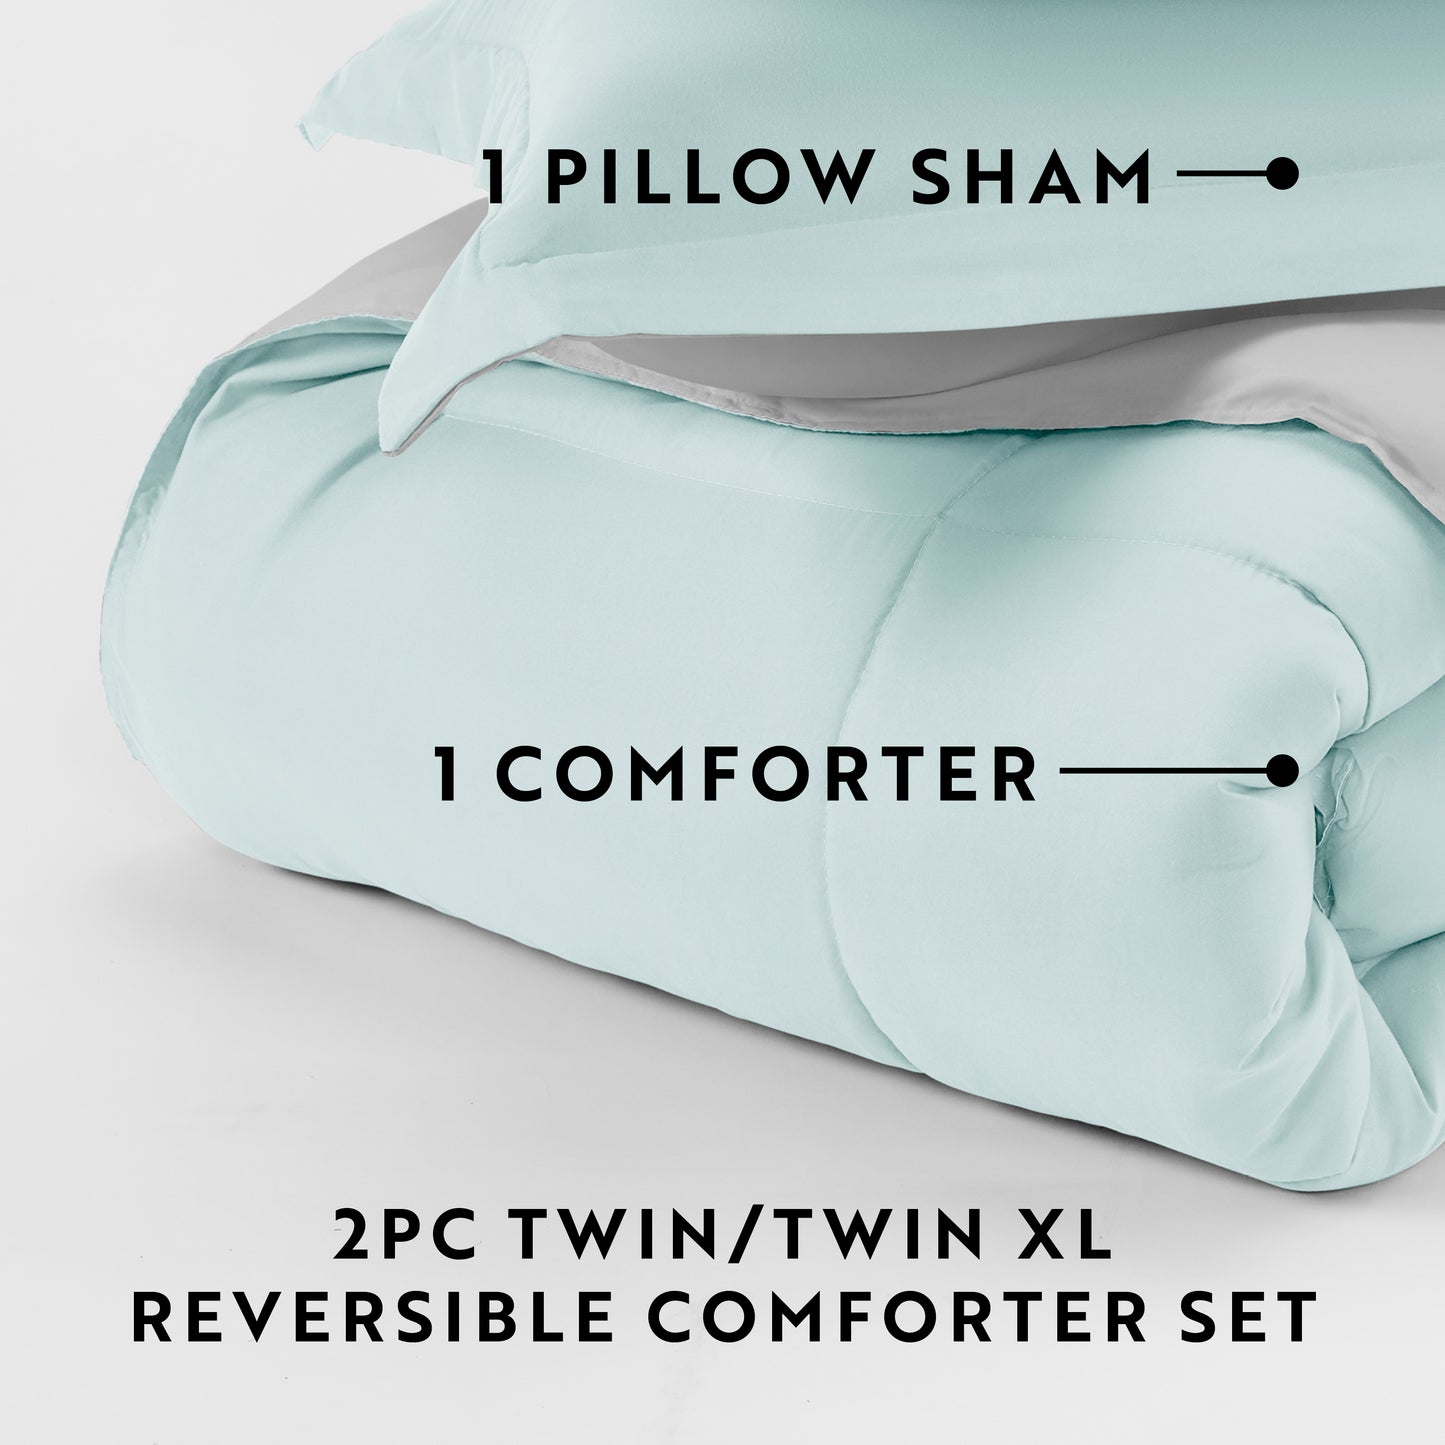 2pc twin/twin xl reversible comforter set